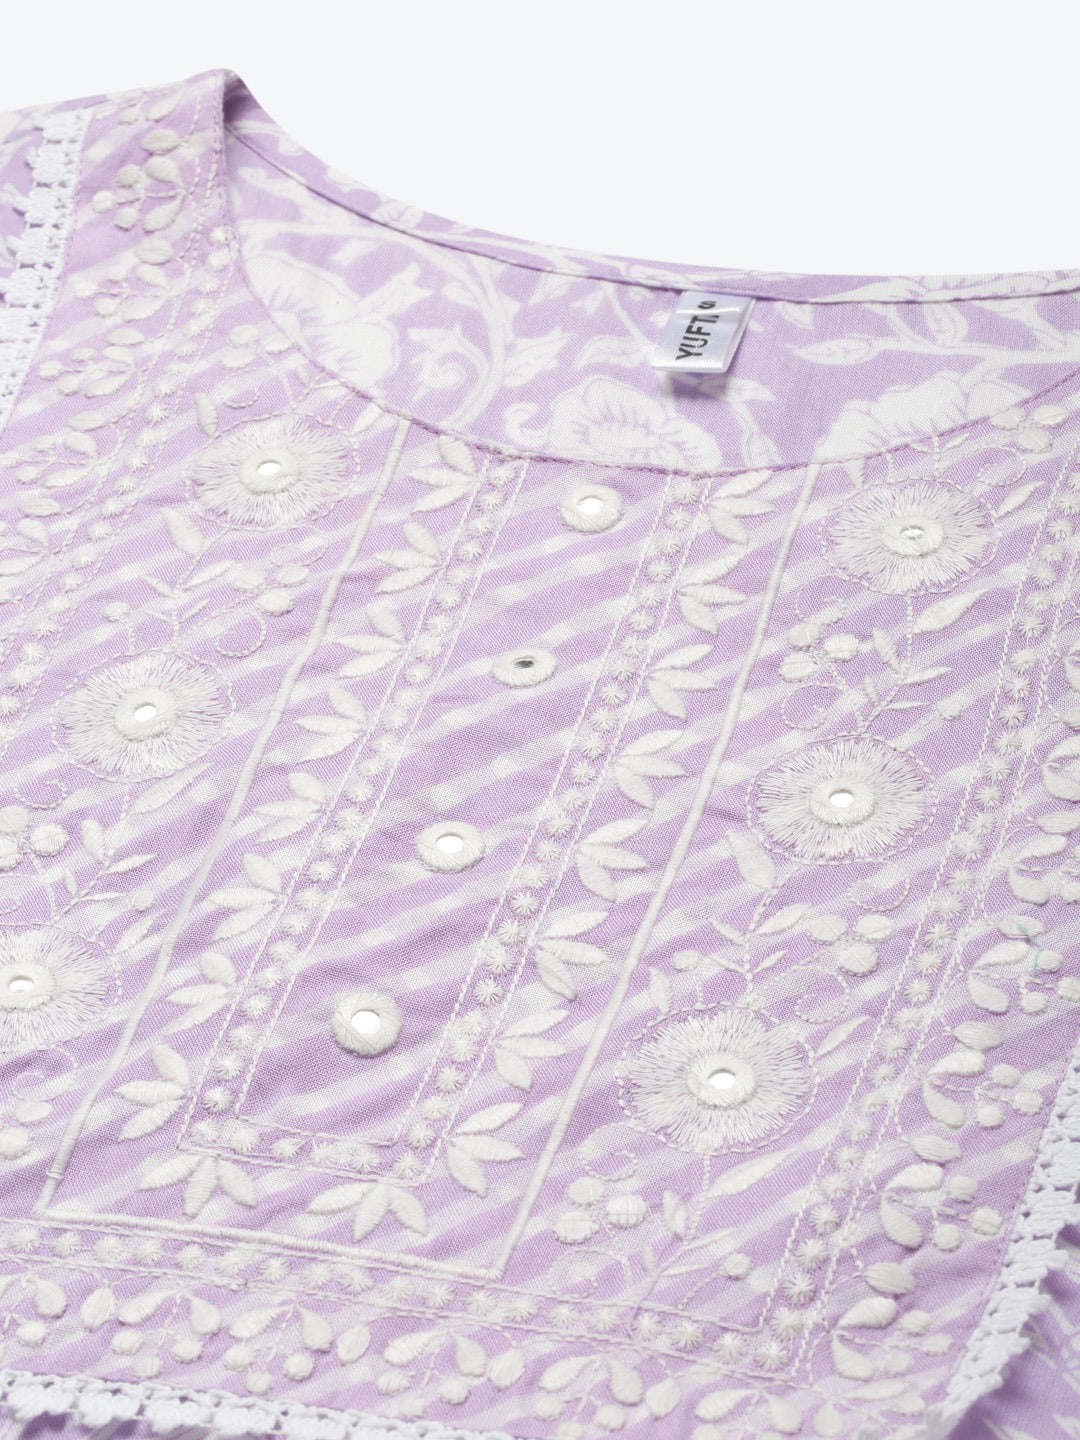 Lavender Embroidered Dress-Yufta Store-9870DRSLVS